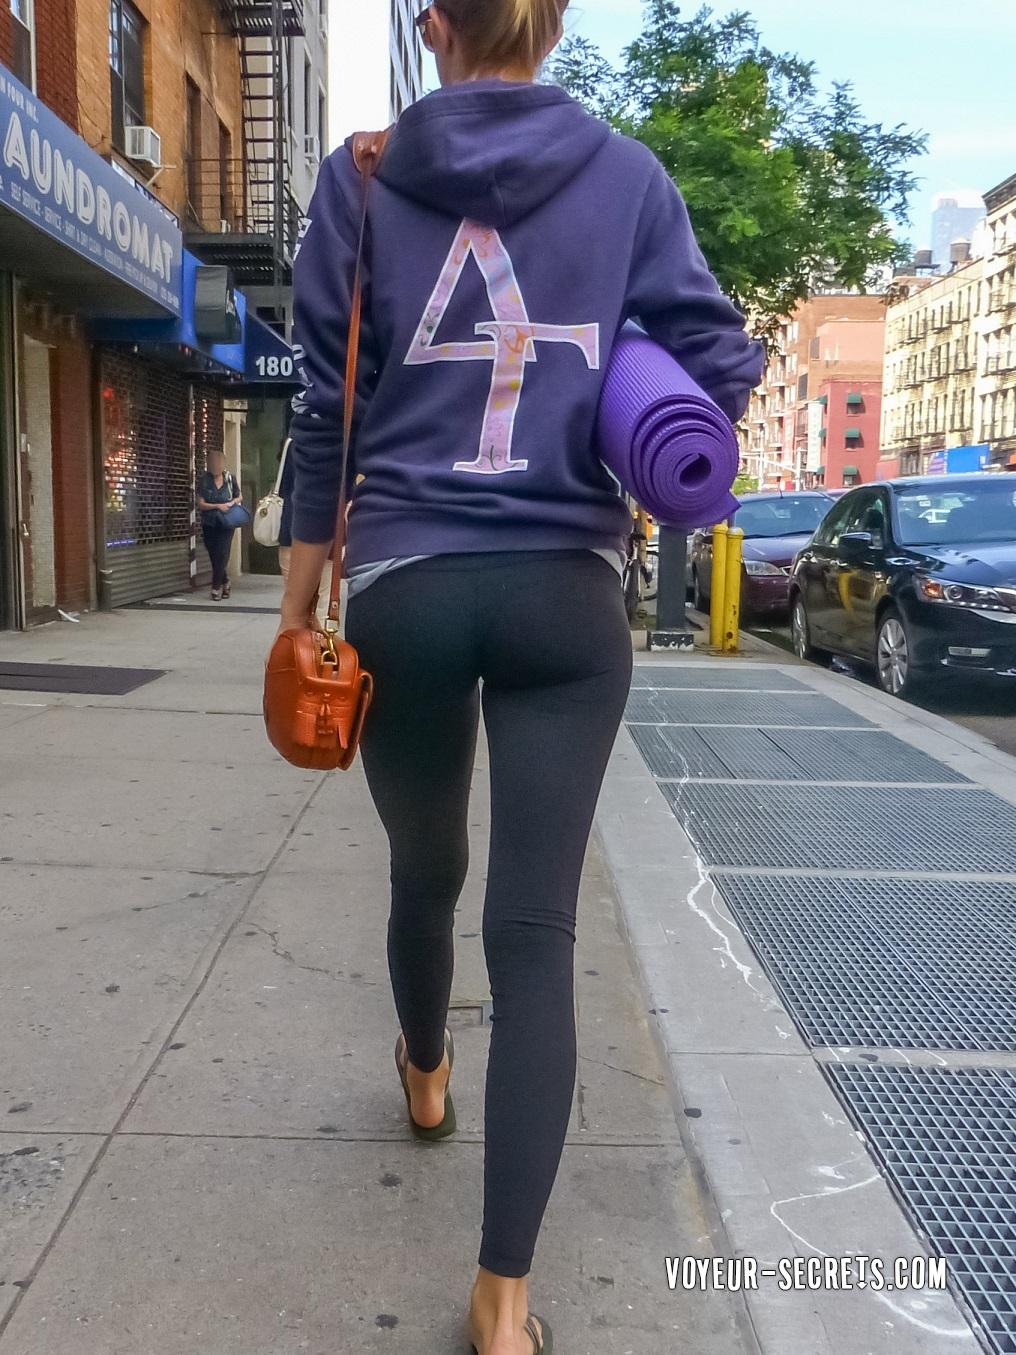 Stunning round ass in yoga pants bilde